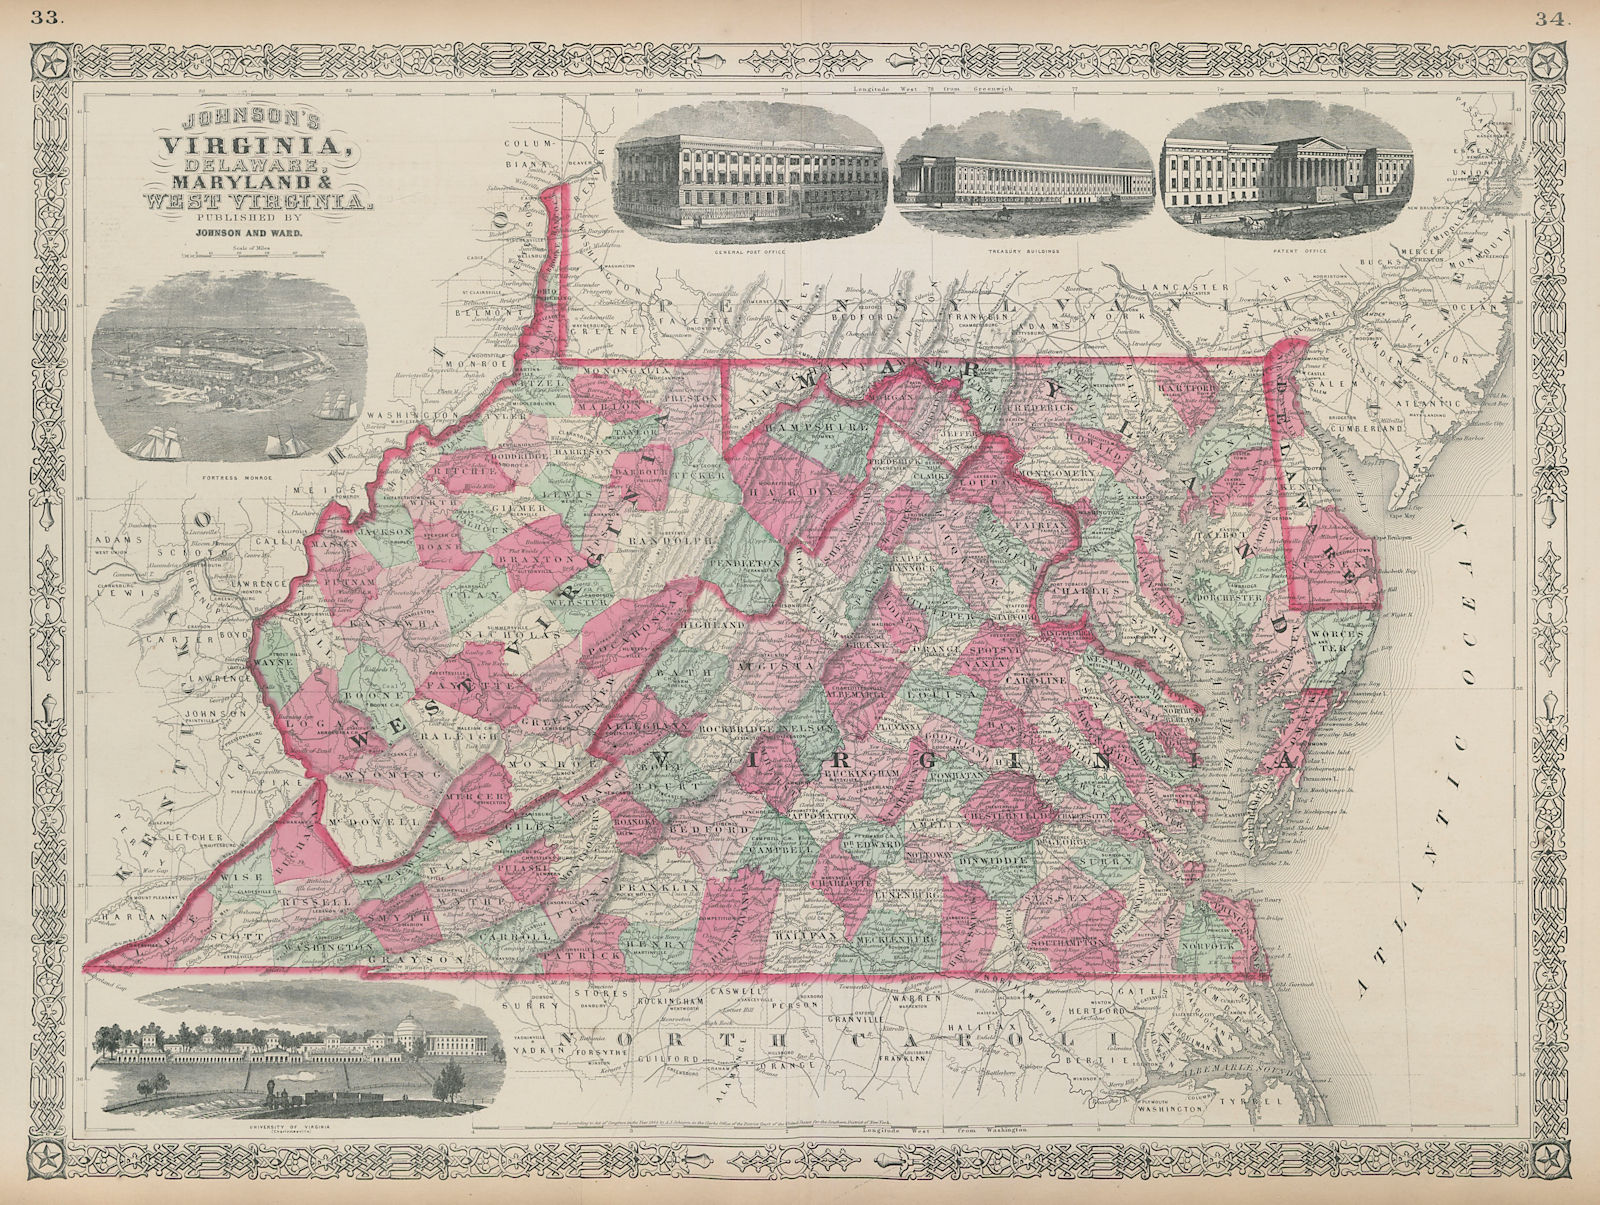 Johnson's Virginia, Delaware, Maryland & West Virginia. Counties 1865 old map